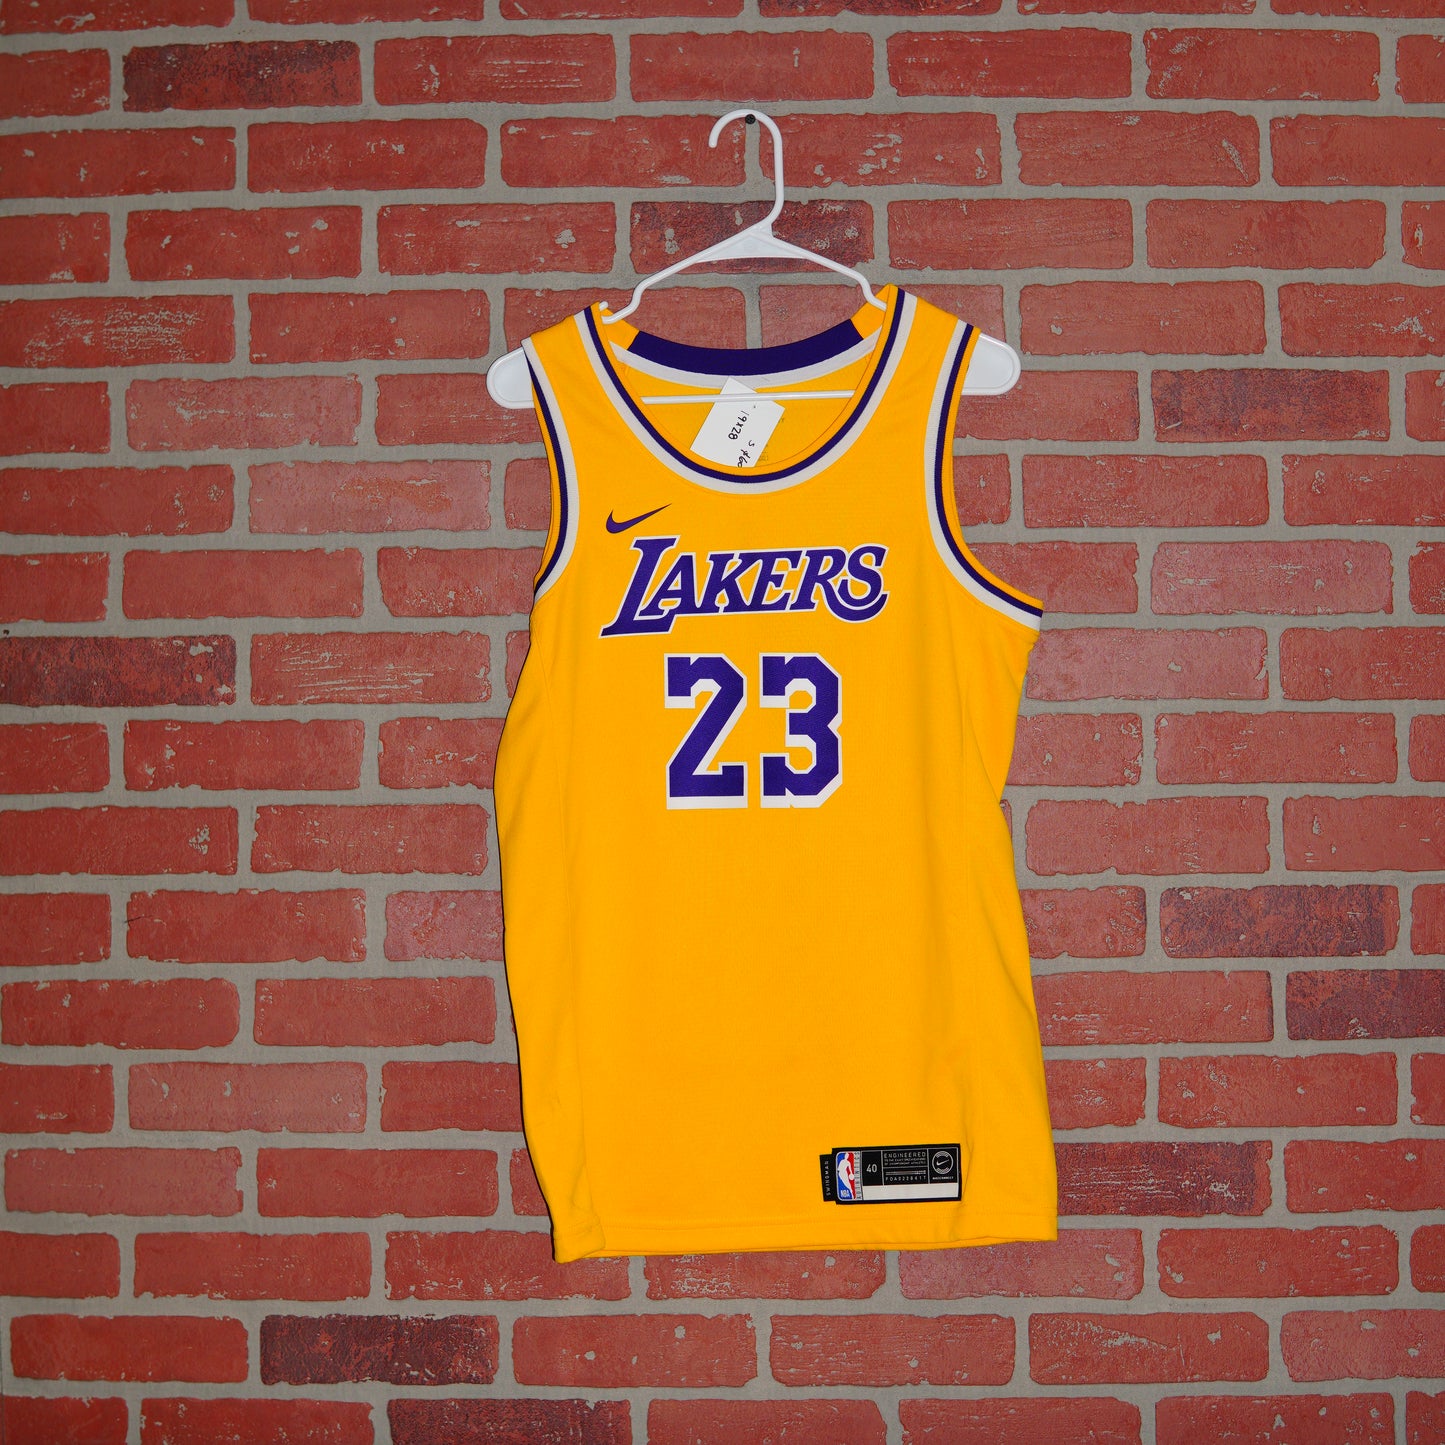 Nike NBA Los Angeles Lakers LeBron James Swingman Jersey